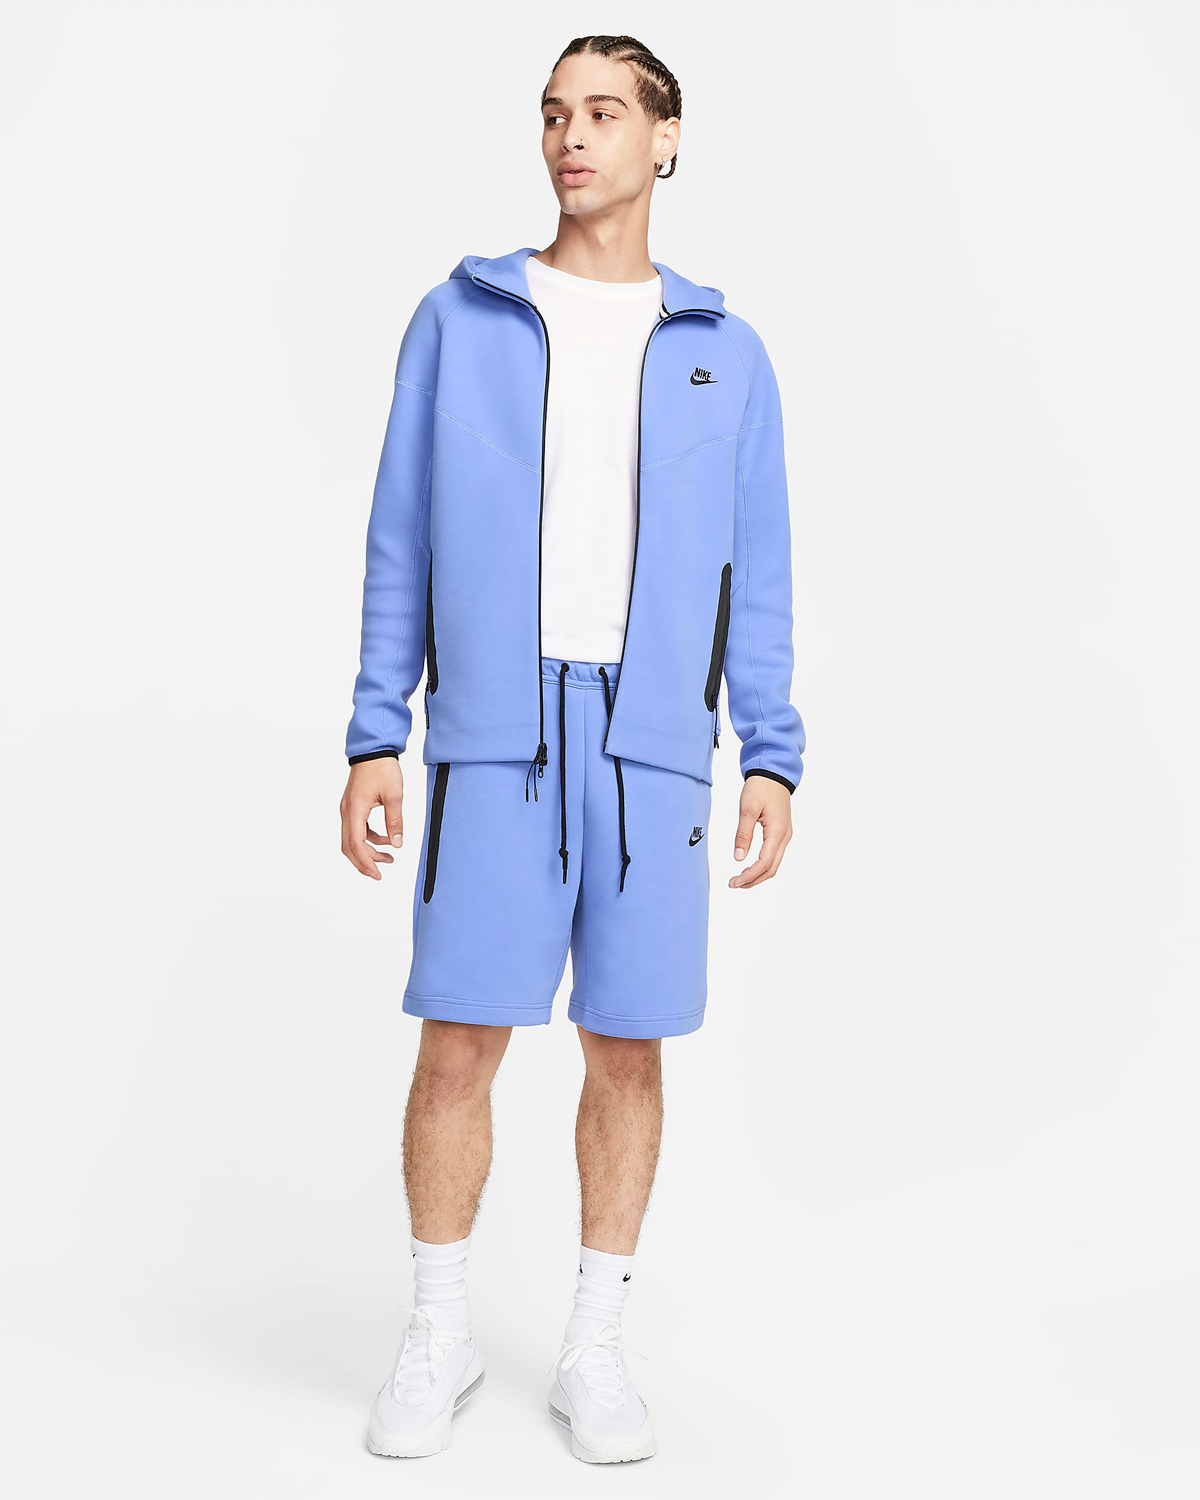 Nike-Tech-Fleece-Hoodie-Shorts-Polar-Blue-Black